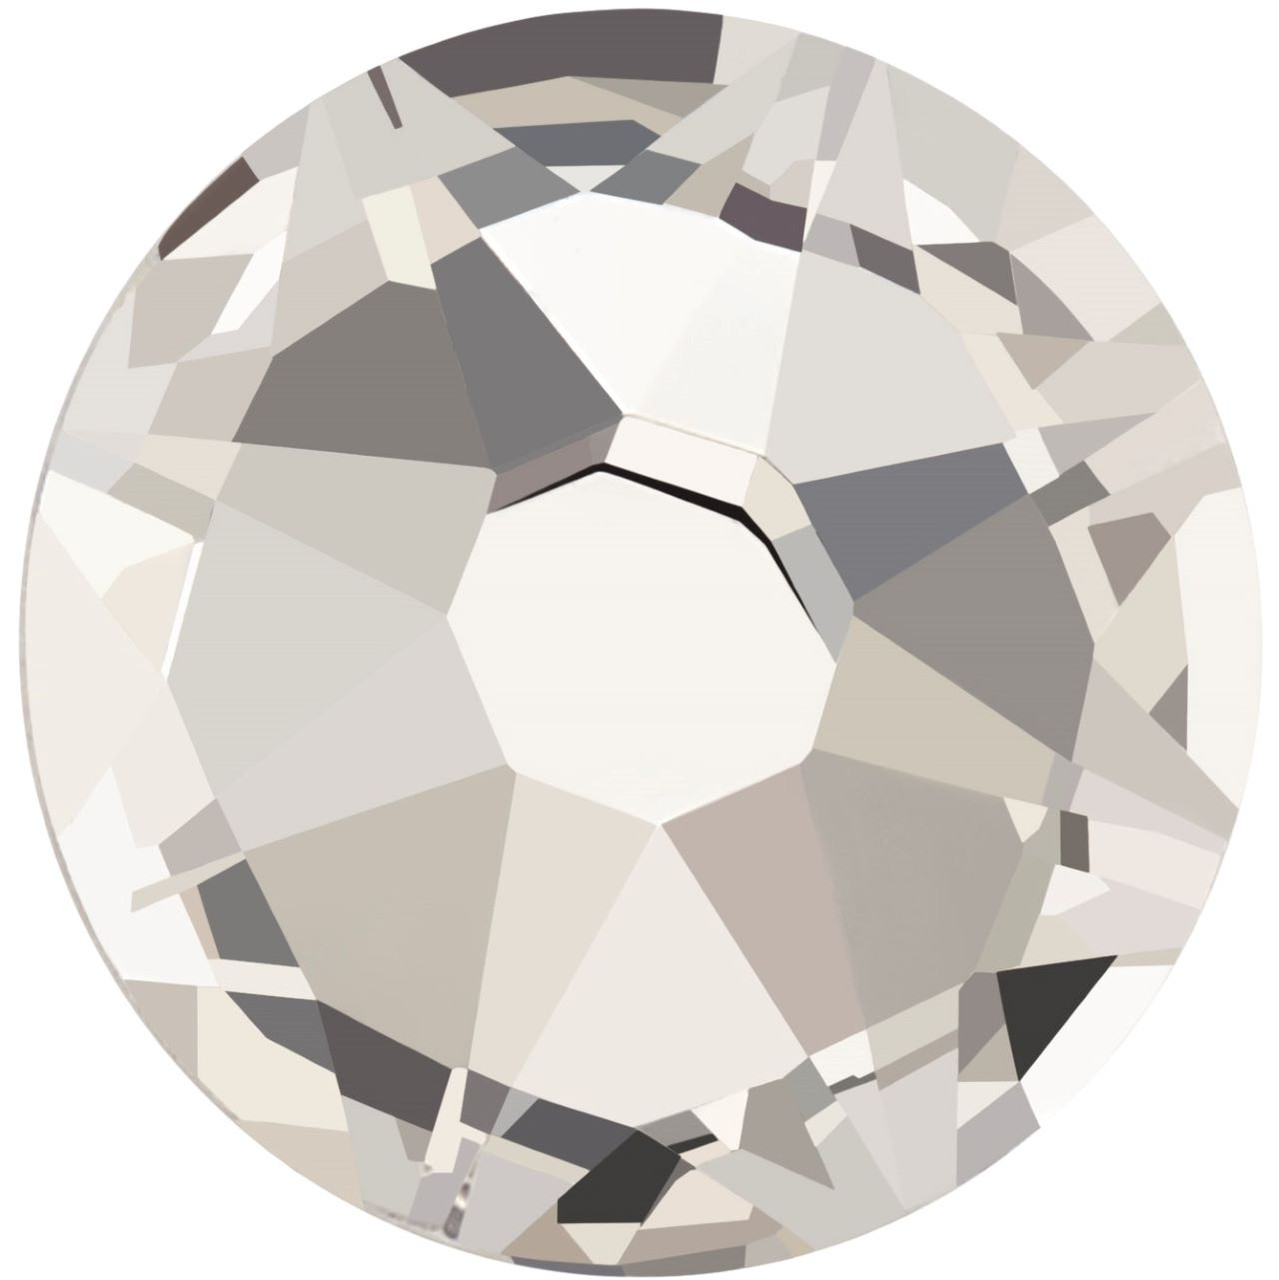 Starcut Crystal Flatback Rhinestones Crystal AB 30ss